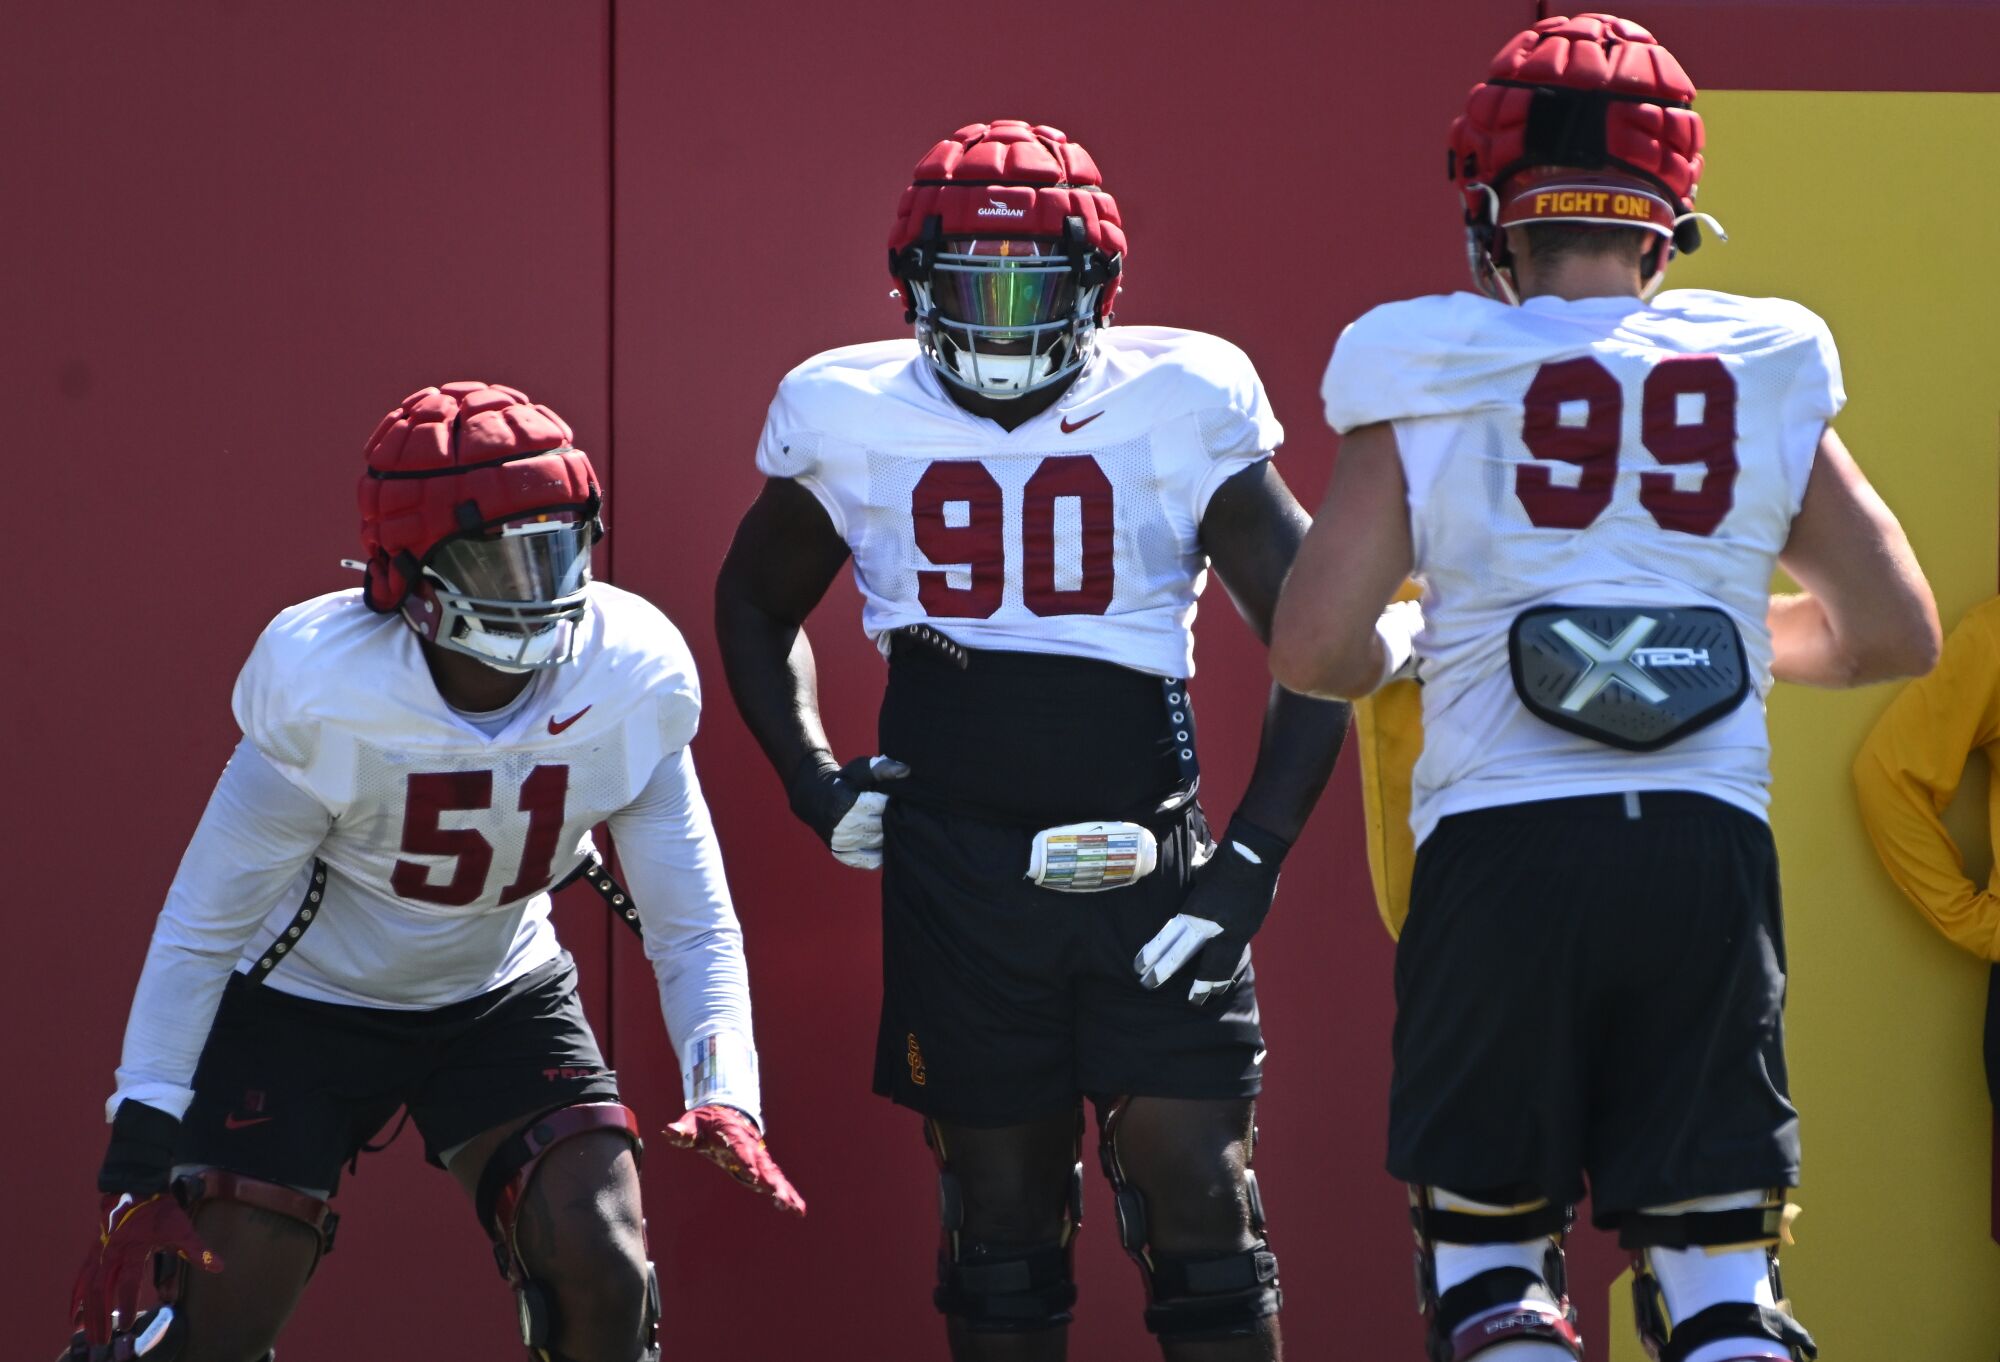 USC defensive lineman Bear Alexander stands beside two teammates during football practice